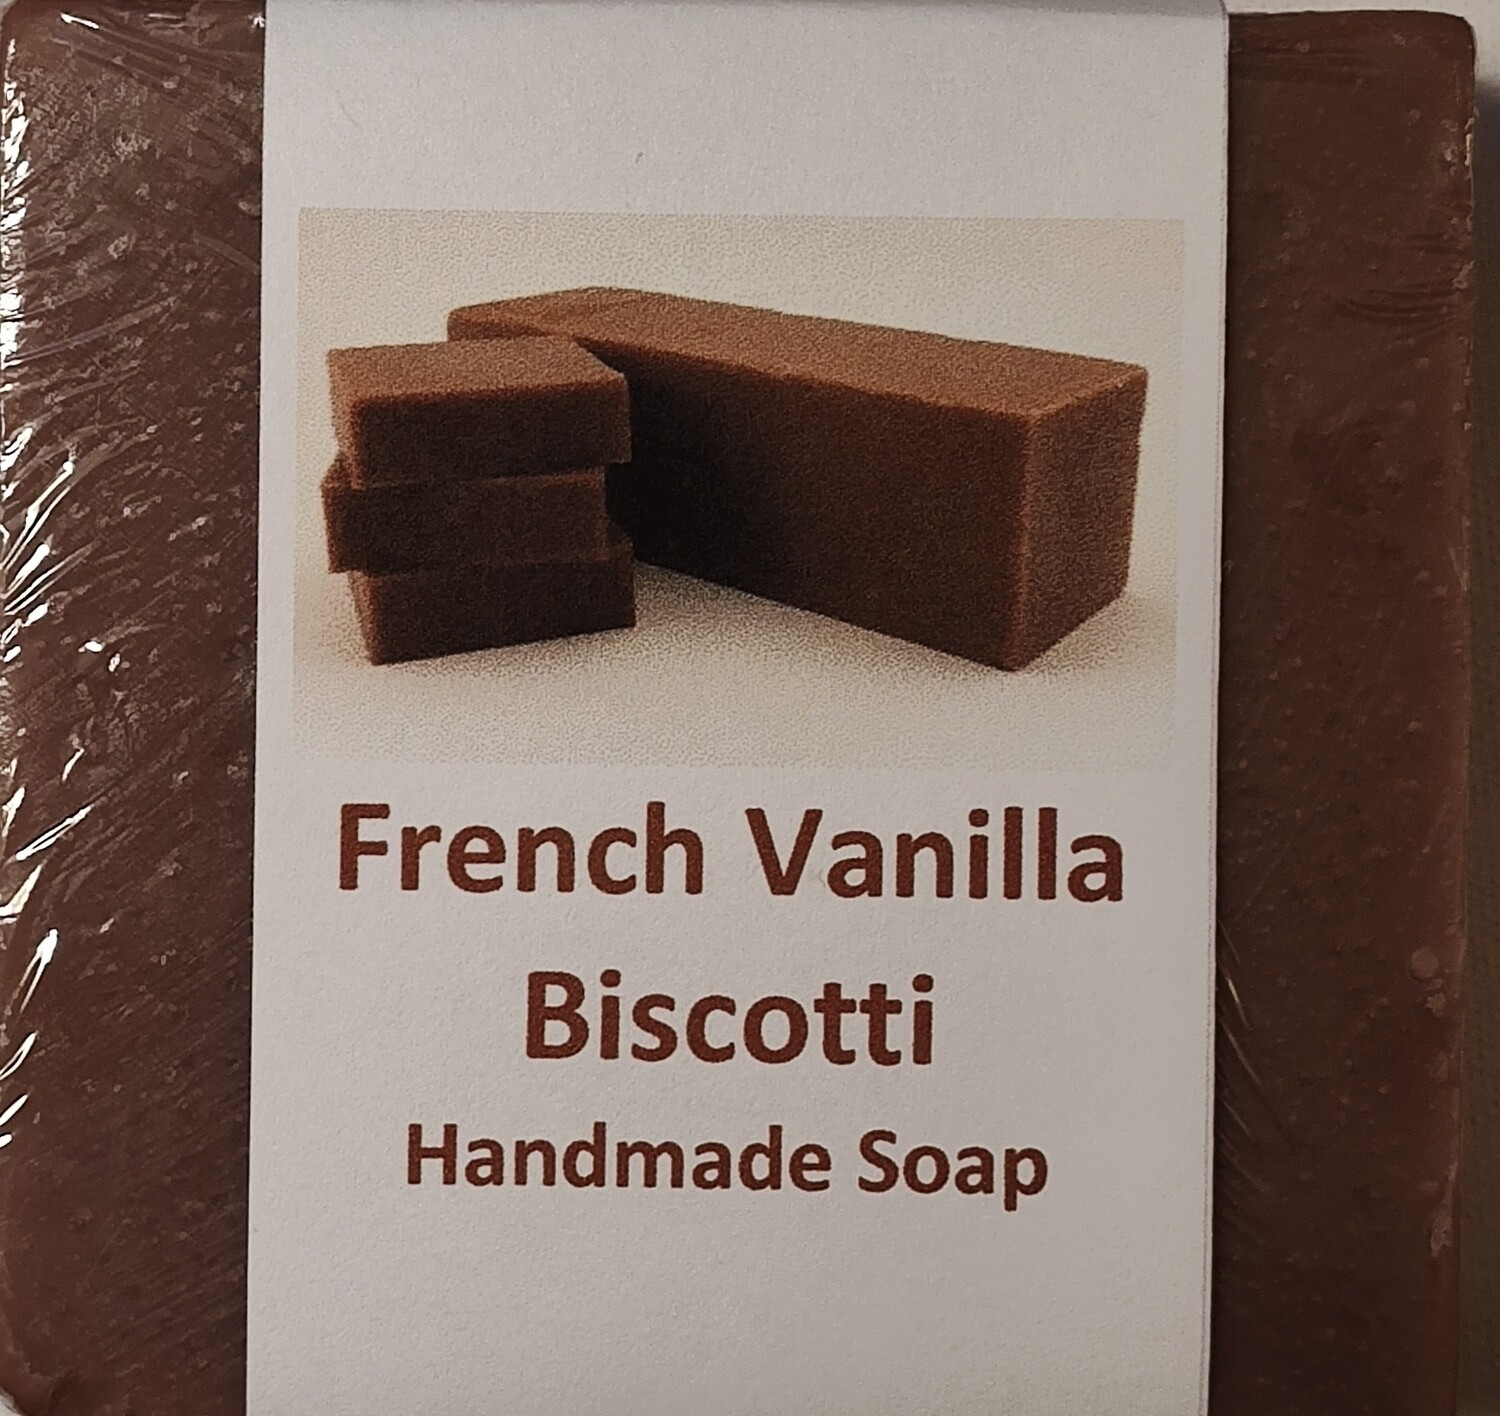 French Vanilla Biscotti